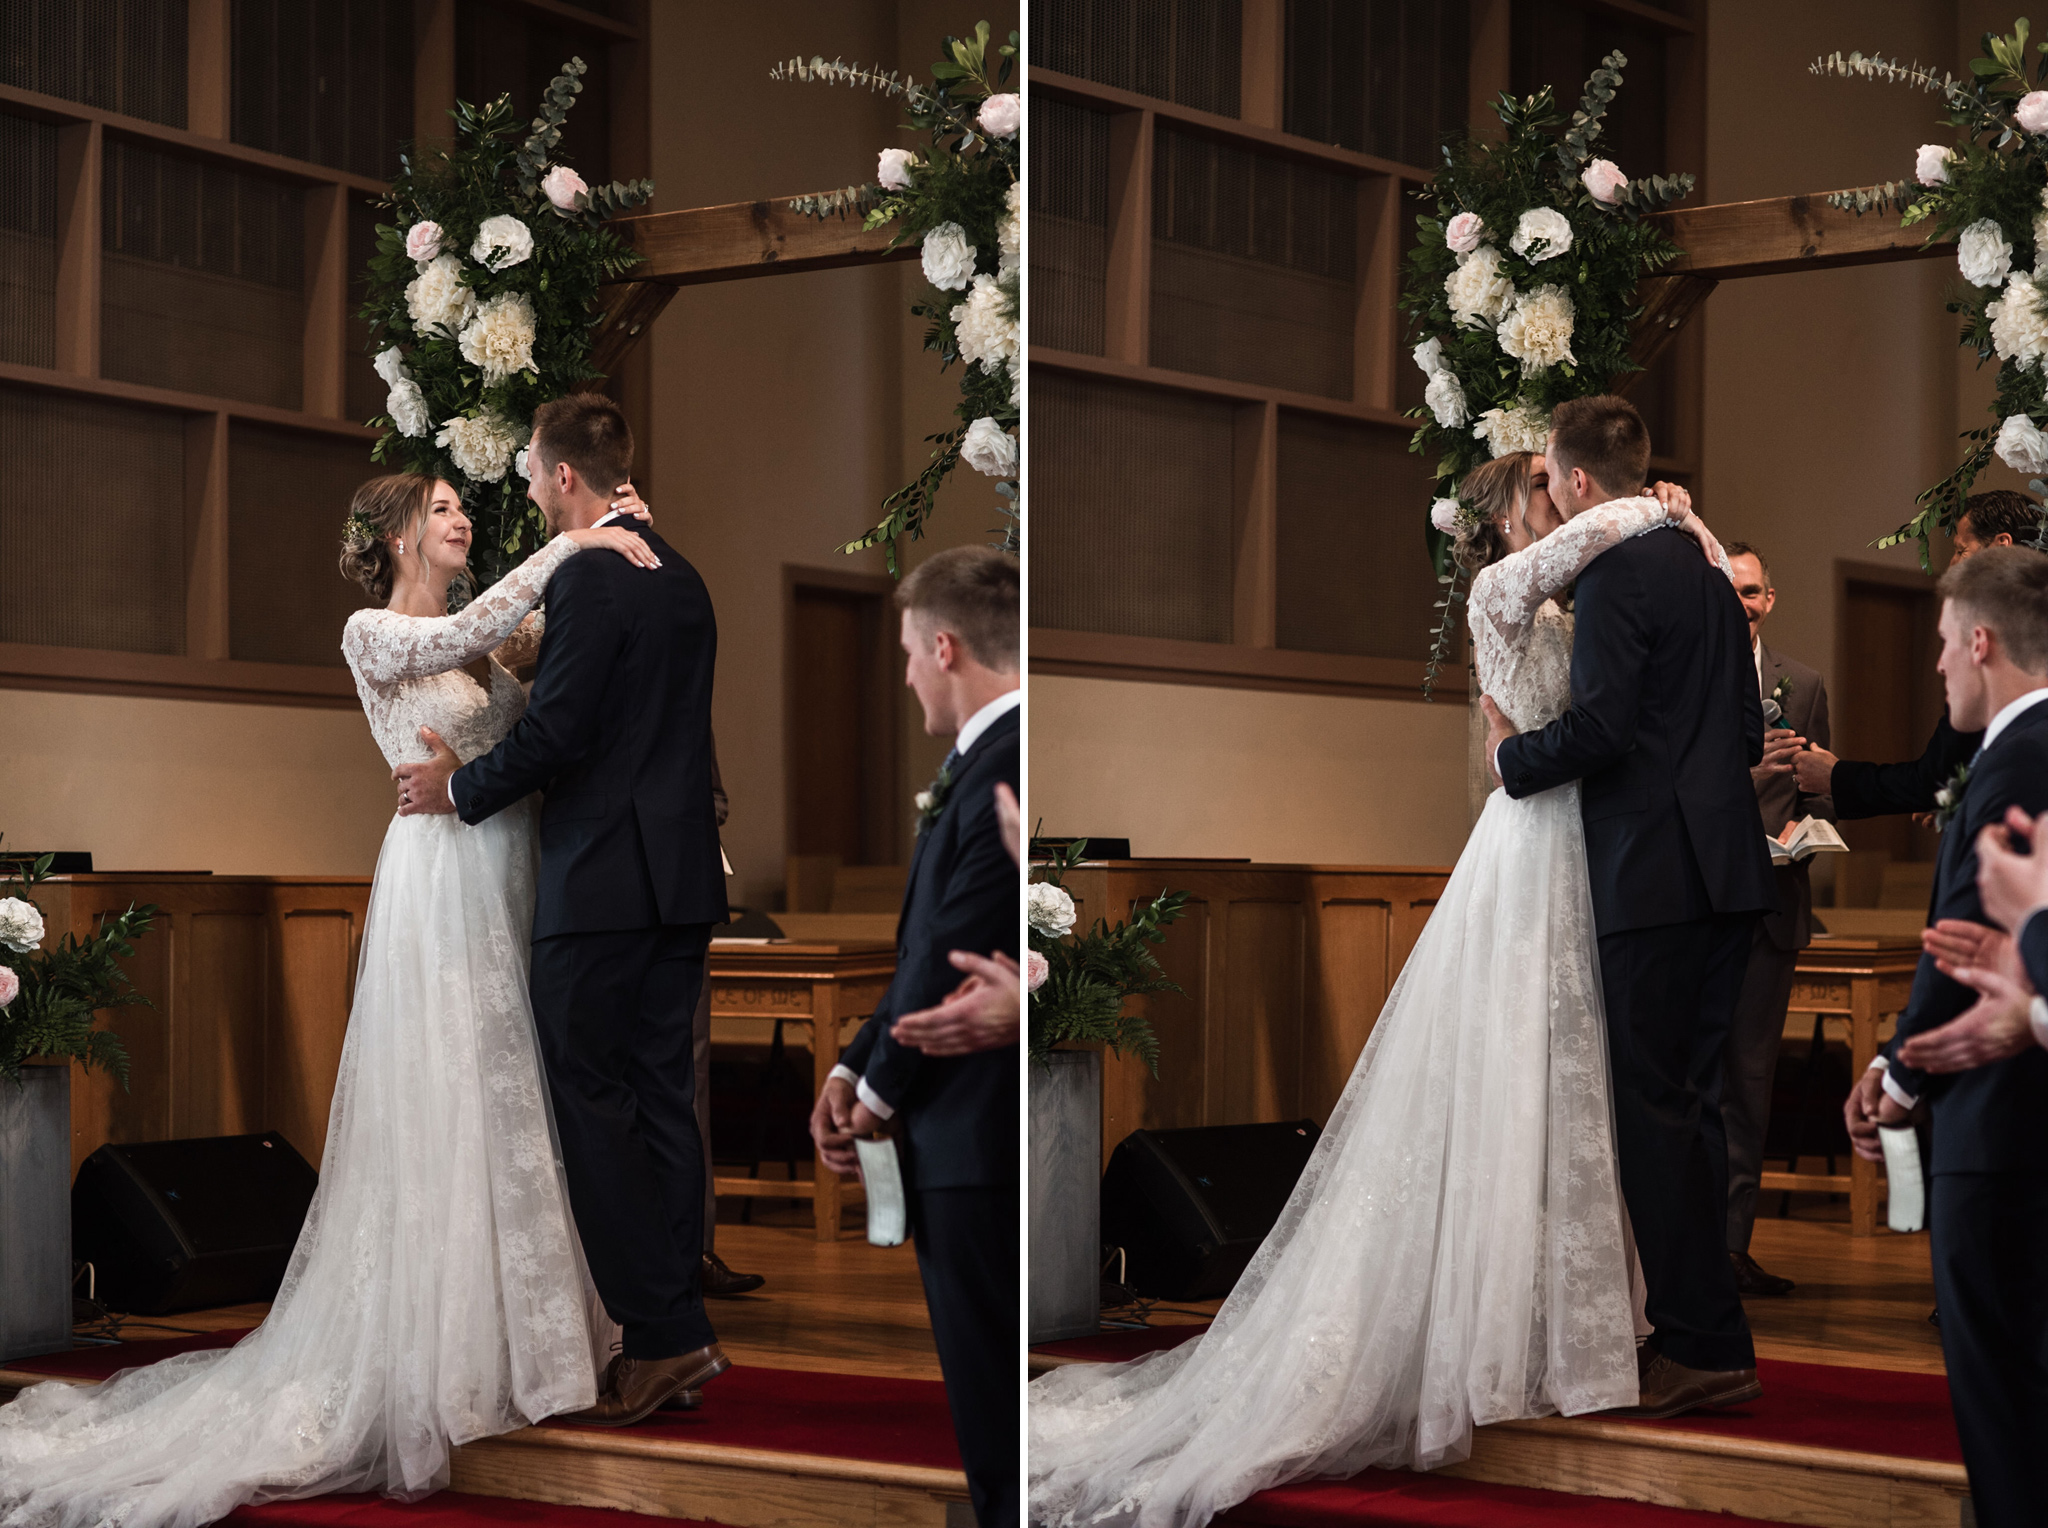 177-first-kiss-church-flower-wood-altar-wedding-long-sleeve-lace-dress.jpg